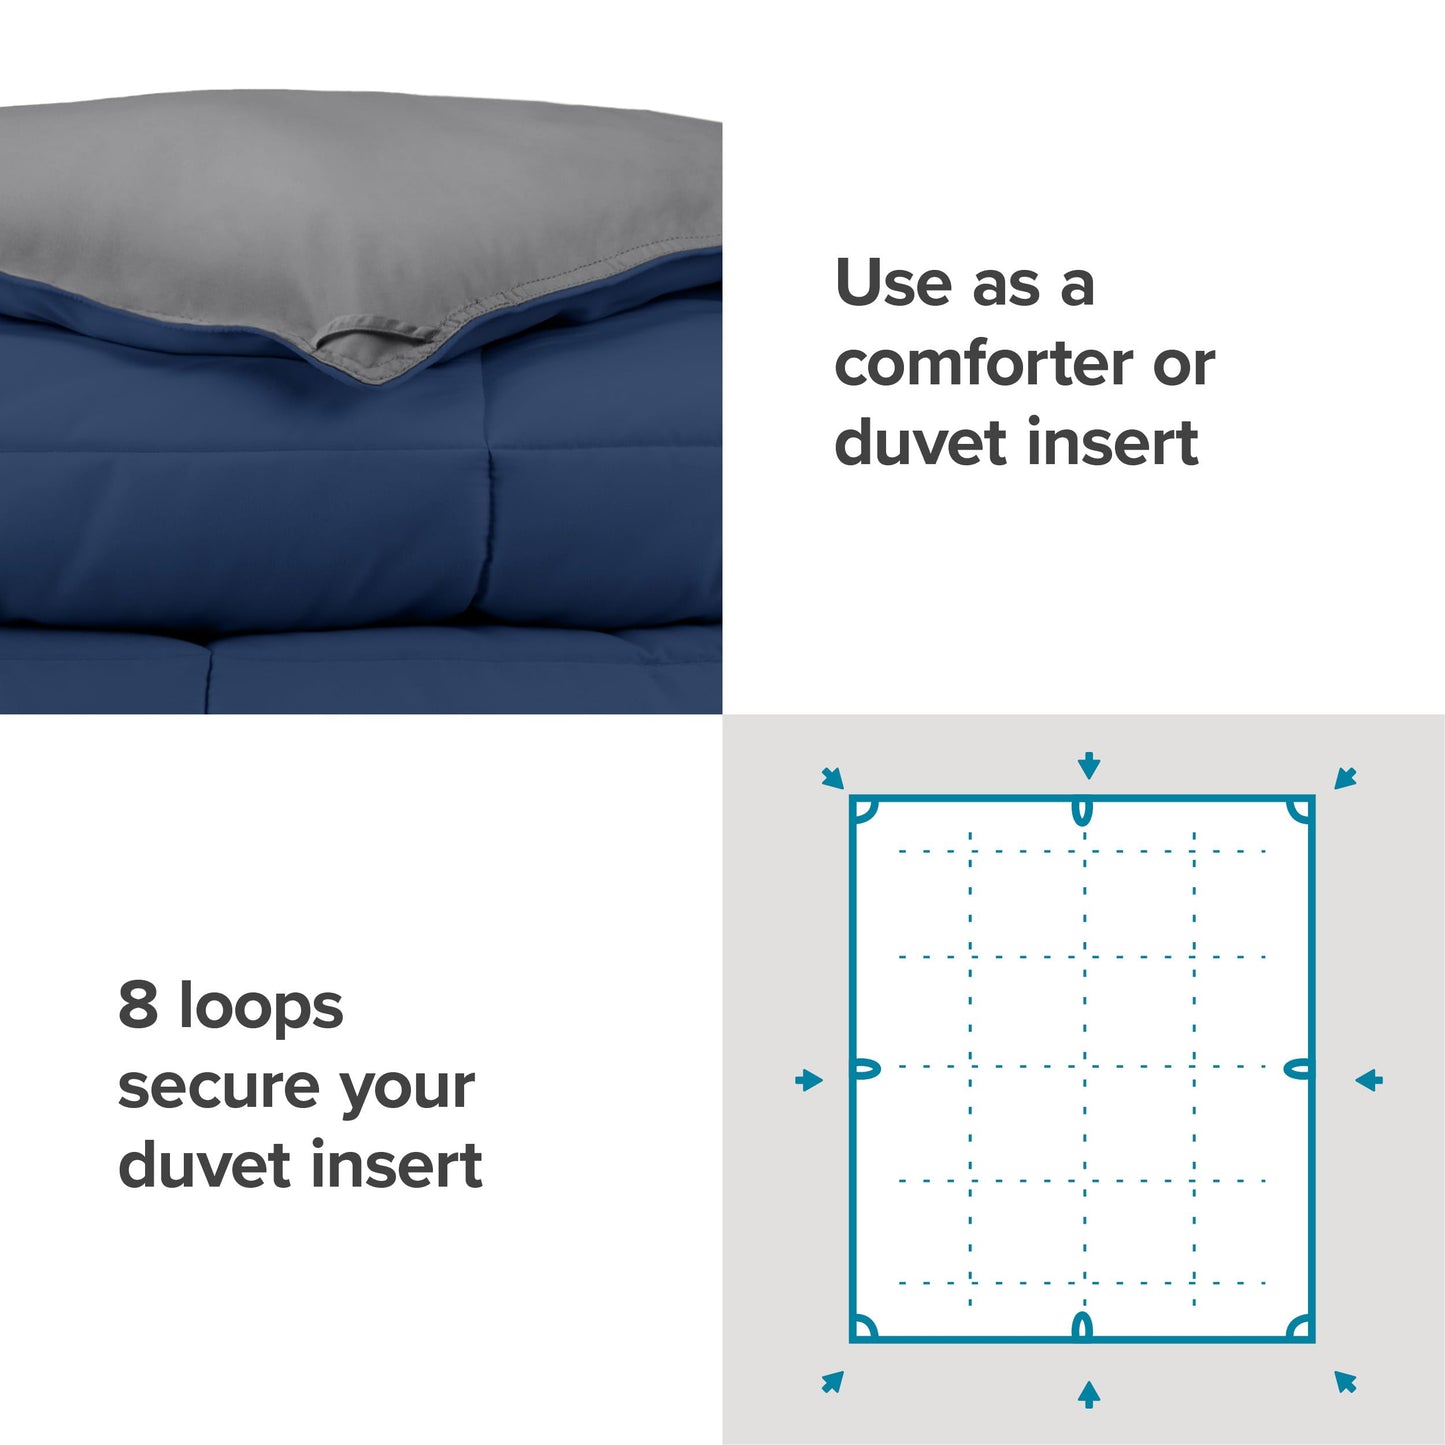 Bare Home Full Comforter - Reversible Colors - Goose Down Alternative - Ultra-Soft - Premium 1800 Series - All Season Warmth - Bedding Comforter (Full, Dark Blue/Grey)